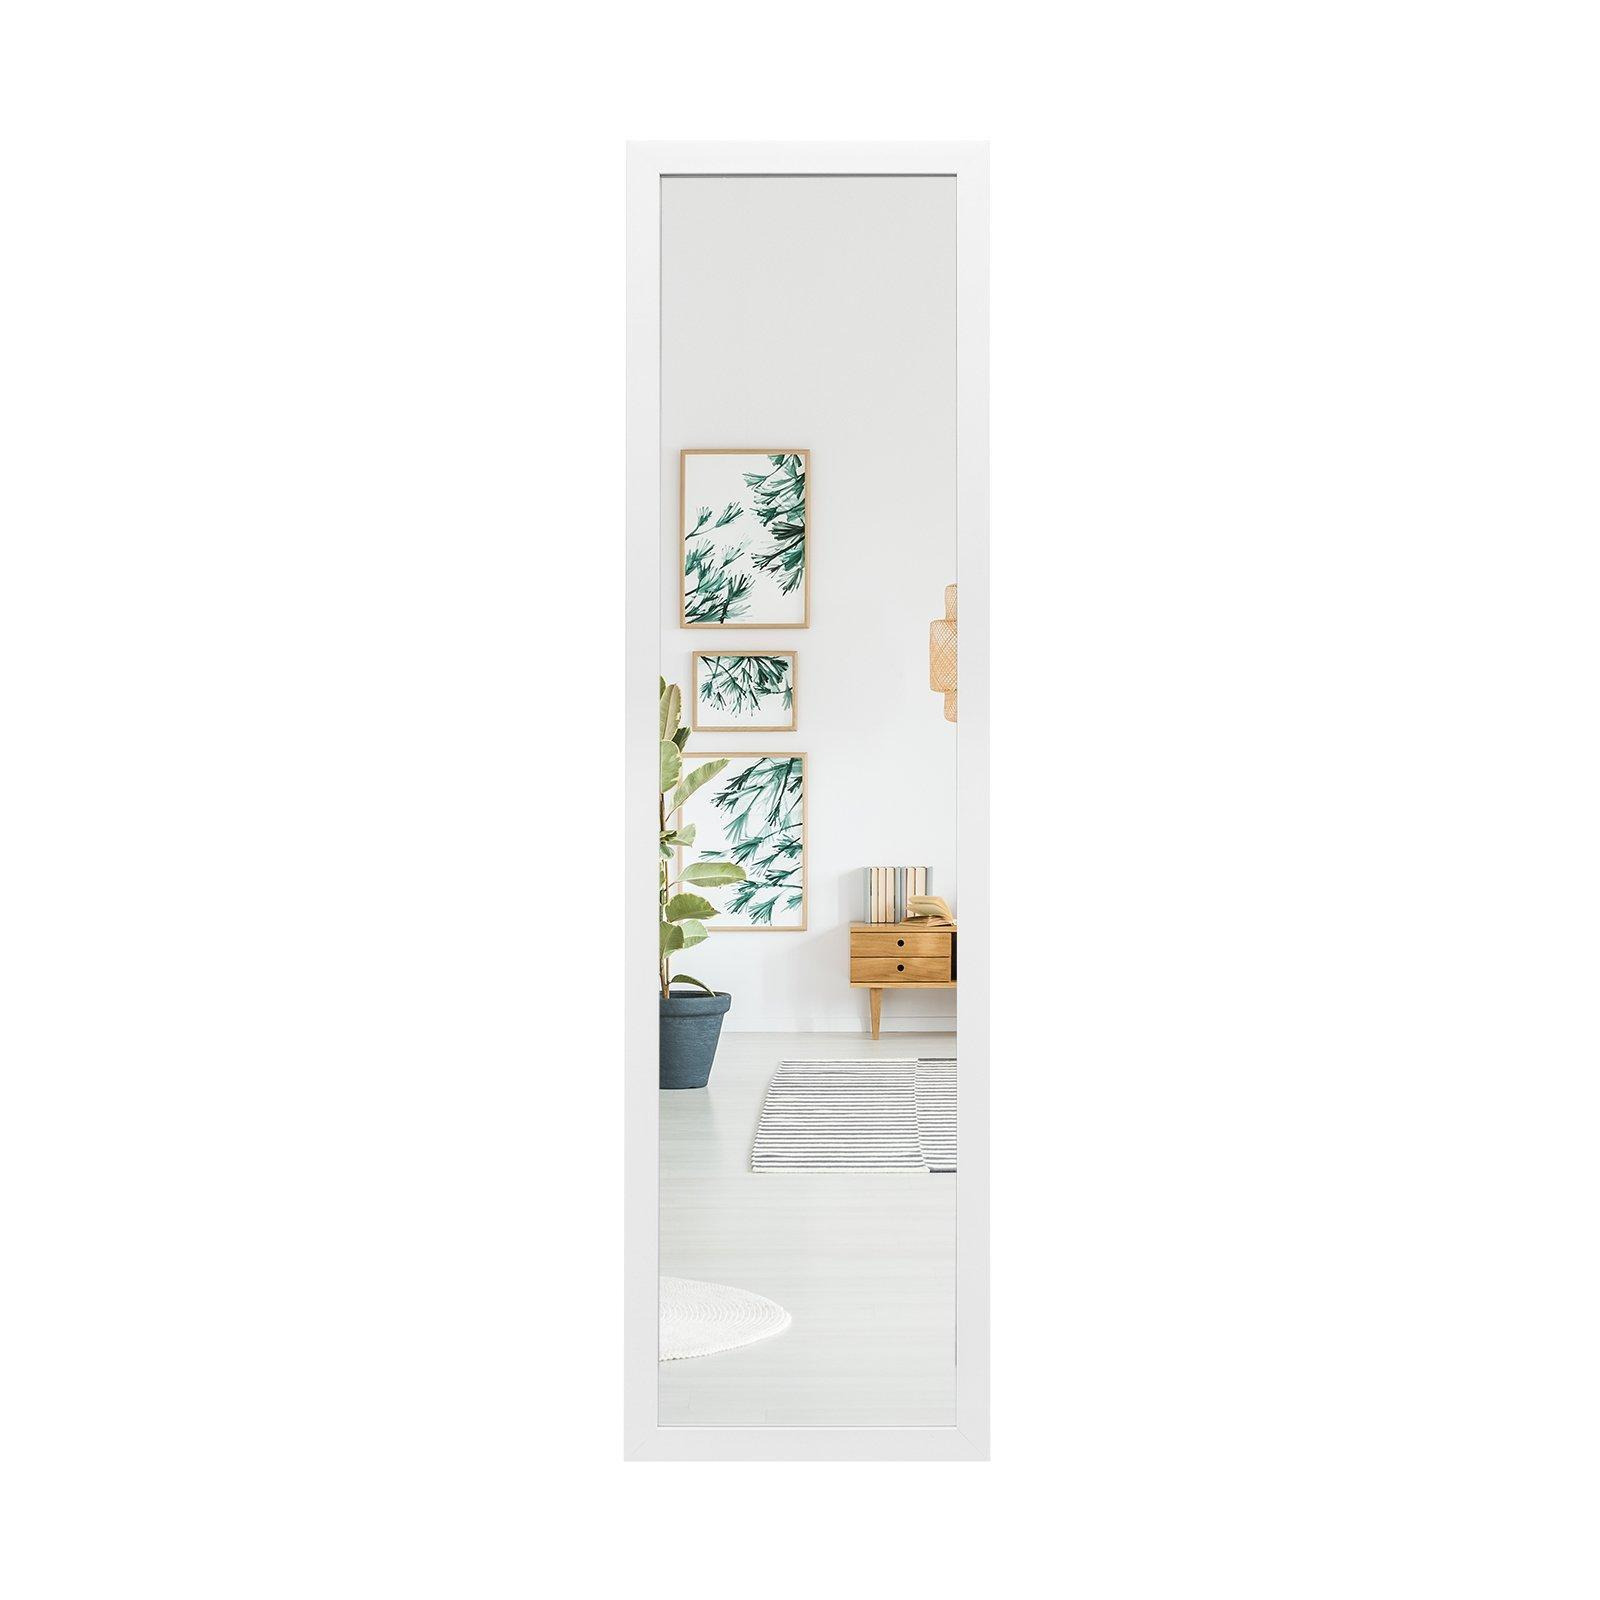 Full Length Over the Door Mirror Bedroom Entryway Wall Hanging Full Body Mirror - image 1